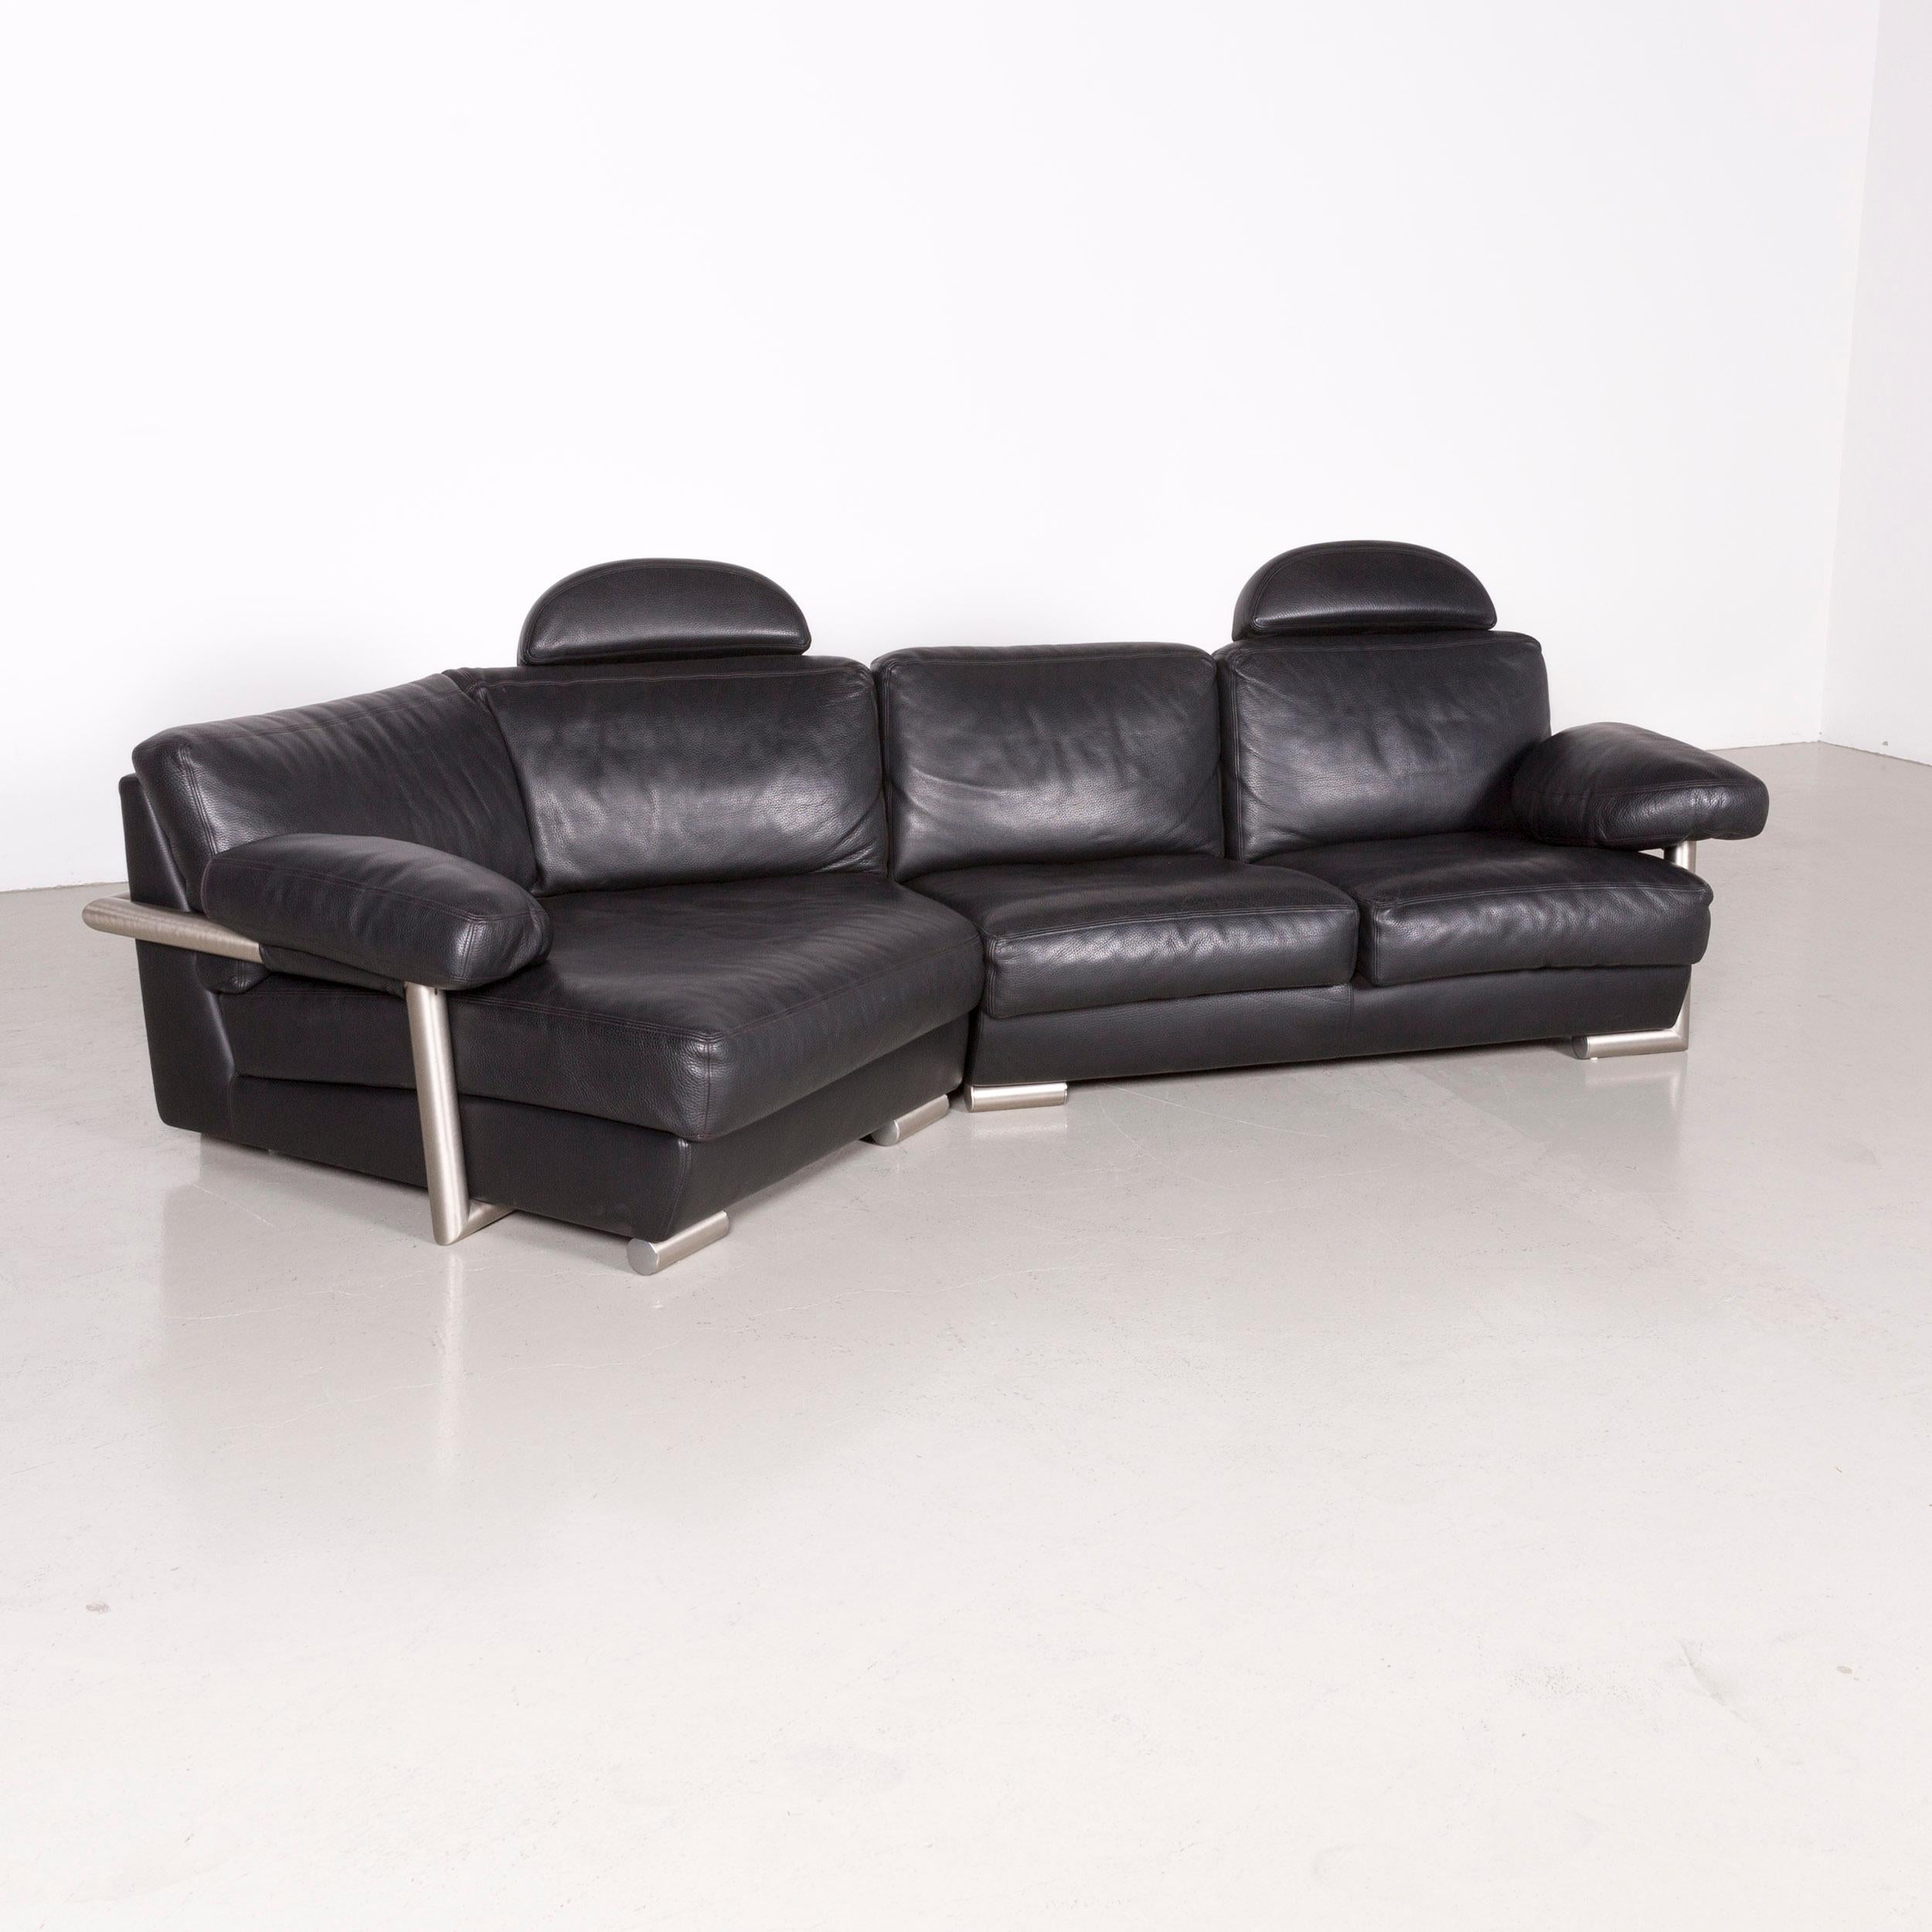 We bring to you an Artanova Medea designer black leather corner sofa.